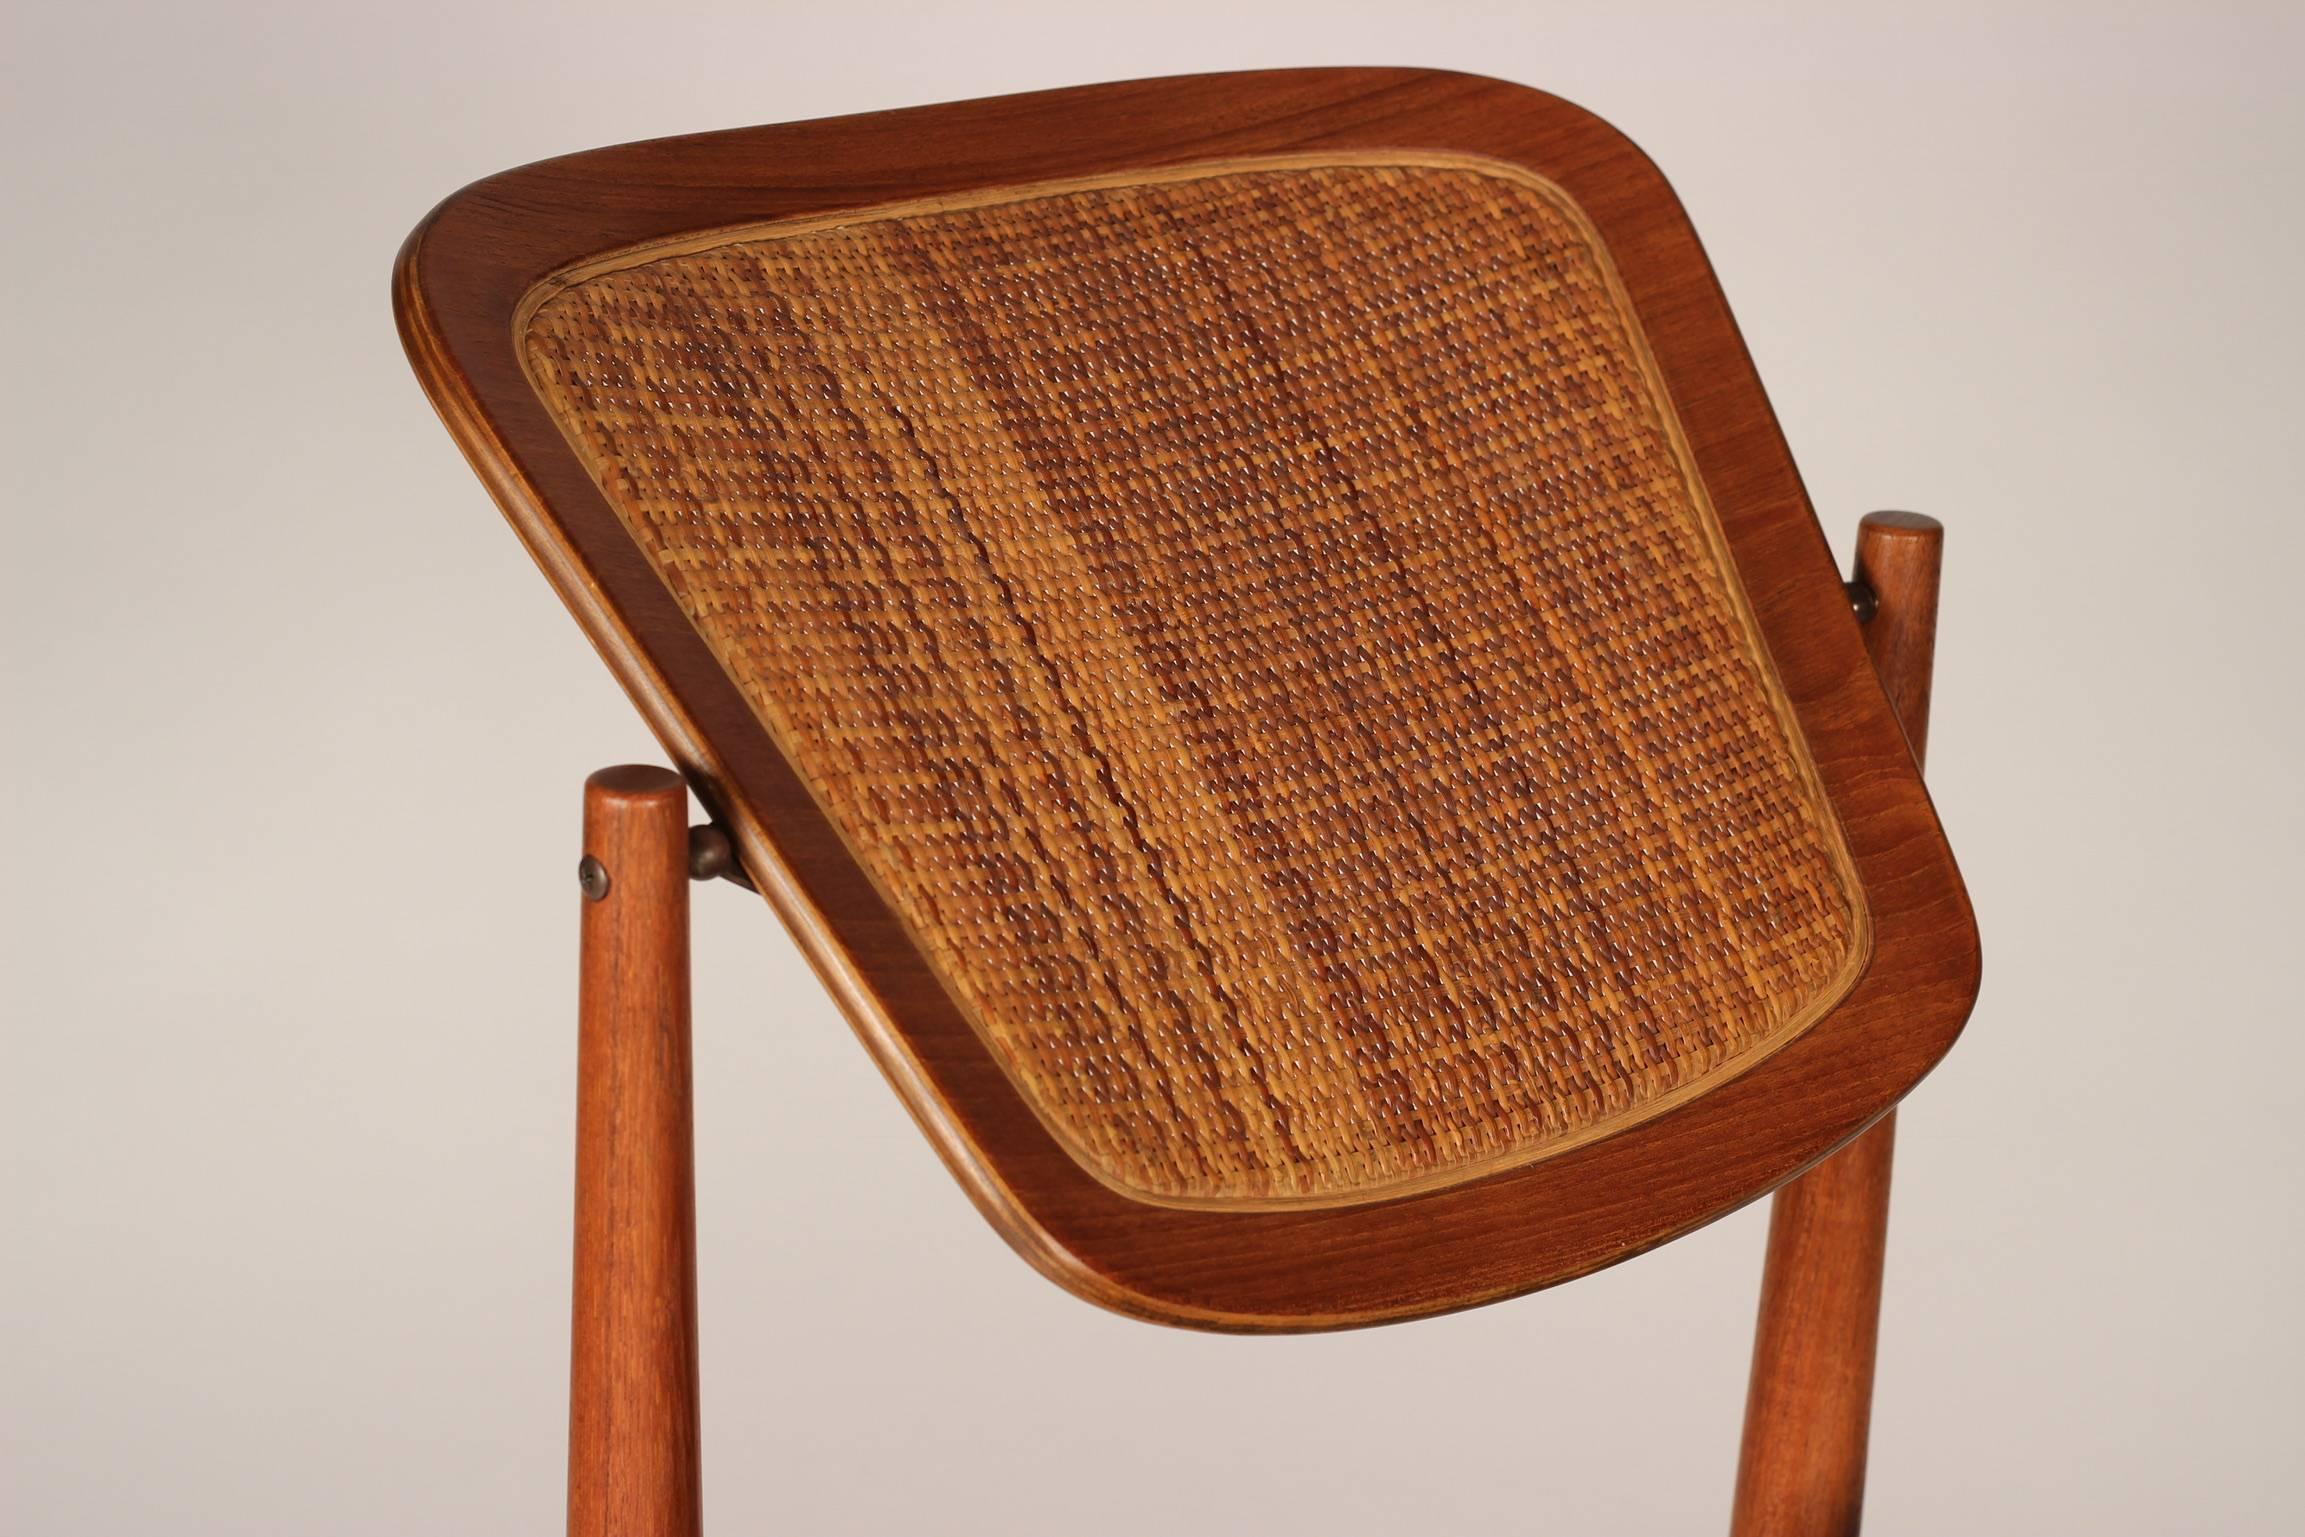 Scandinavian Modern Danish Desk Chair by Arne Vodder in Teak, Cane and Black Leather